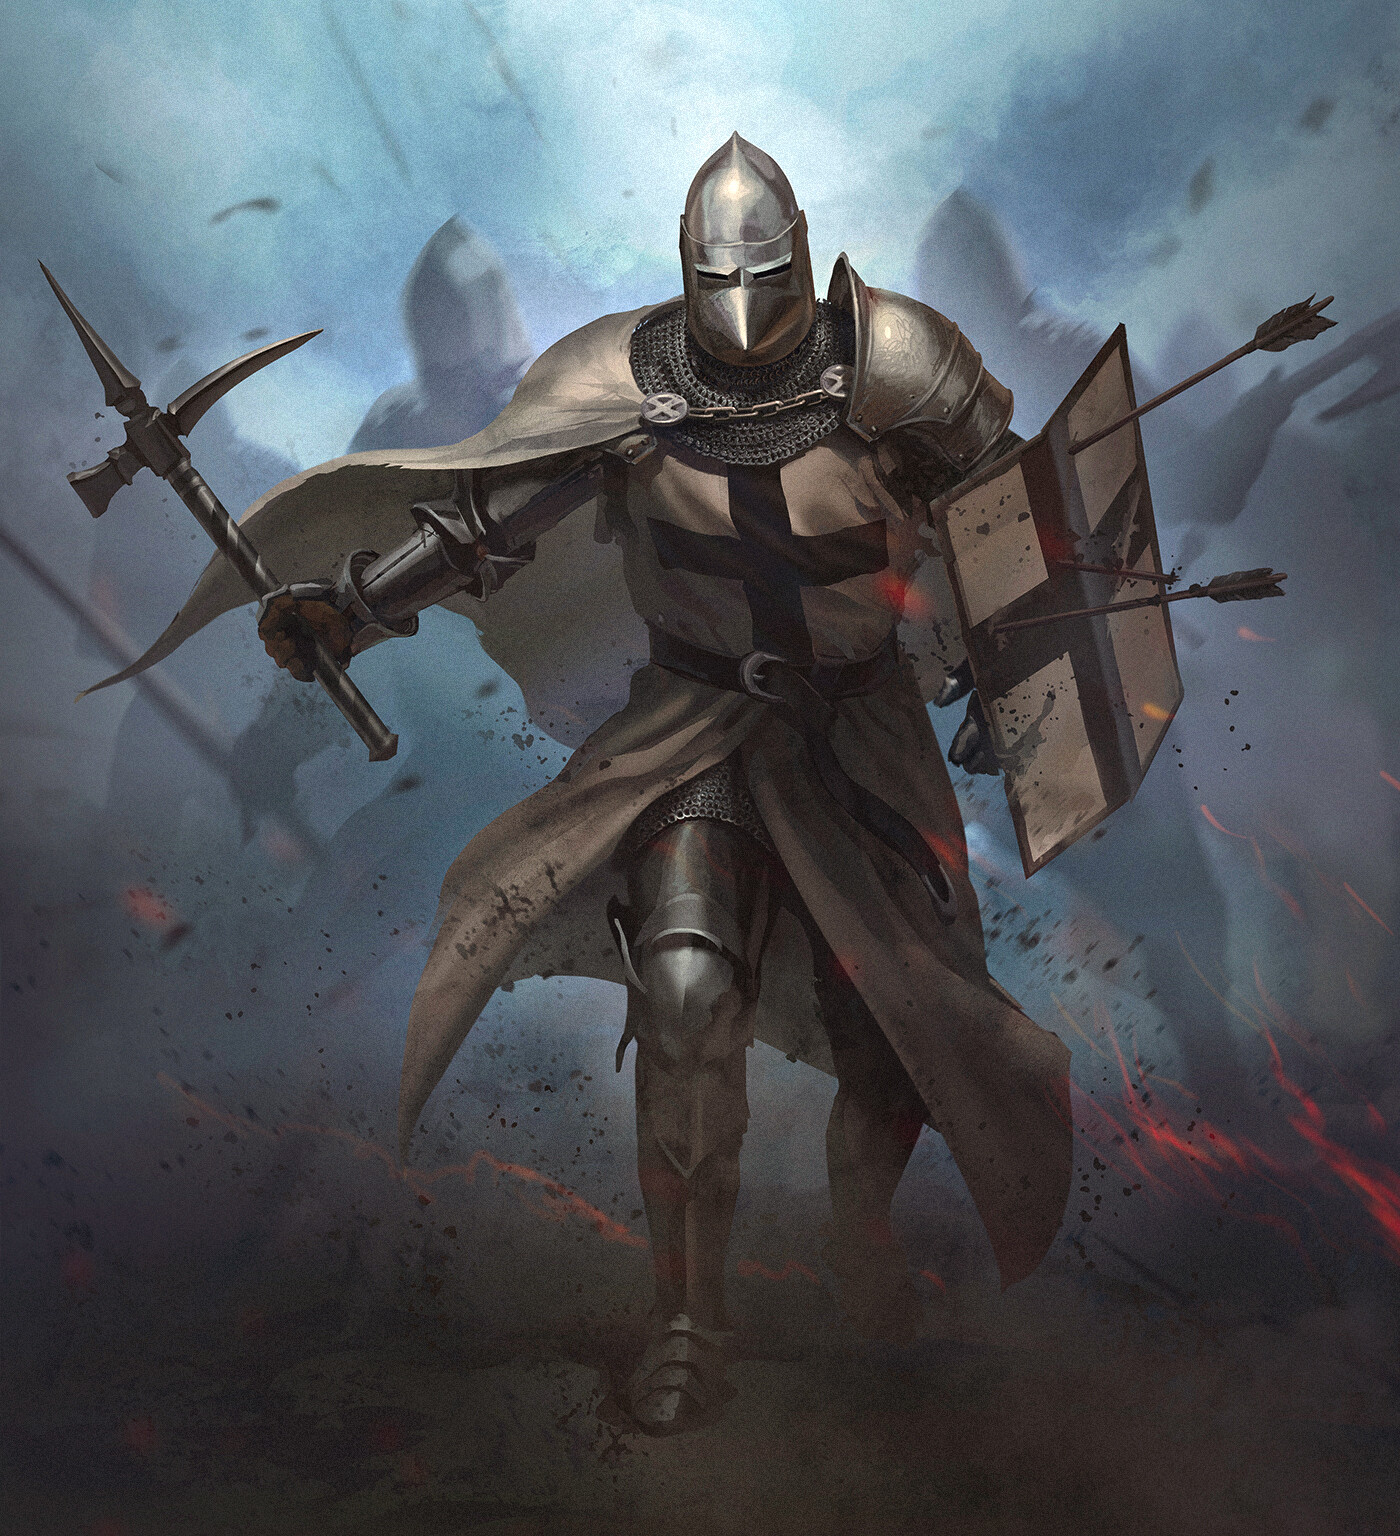 Medieval knight crusader vintage shield armor kingdom of heaven w/ star design 